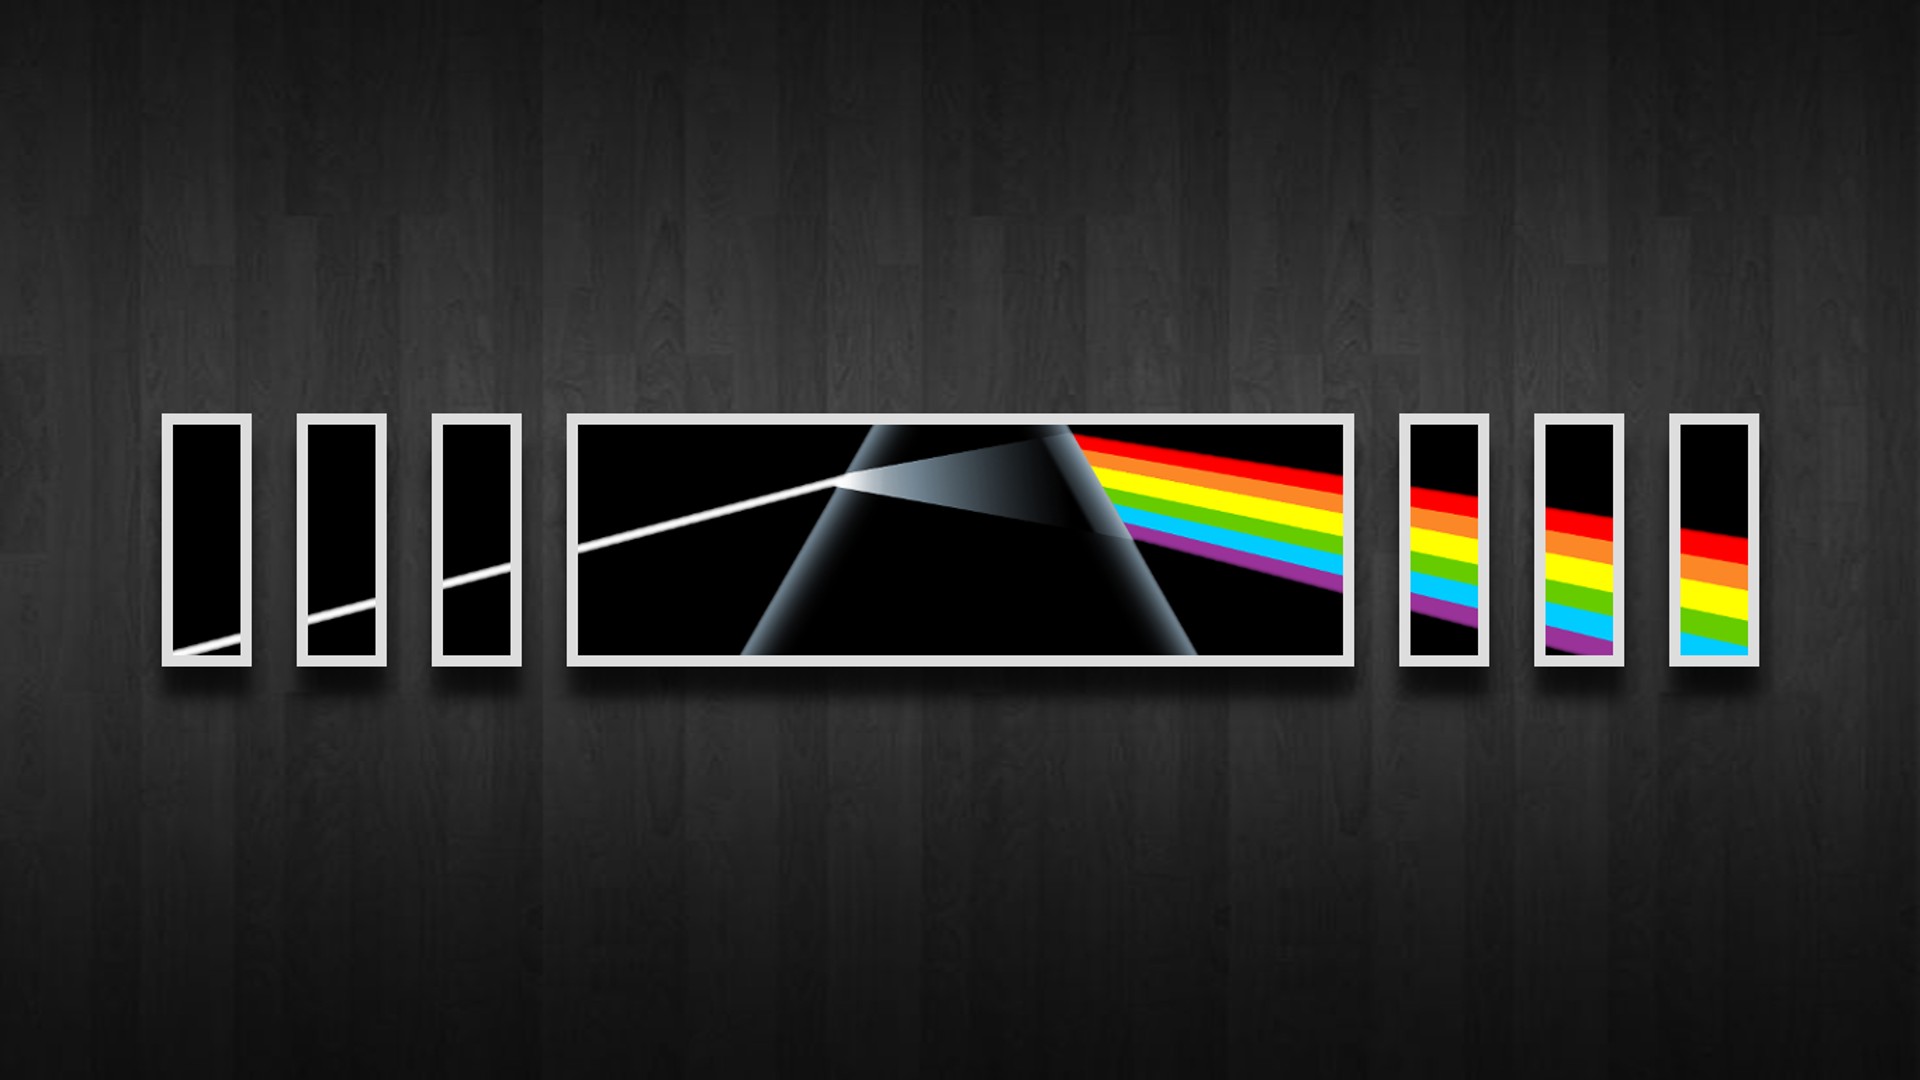 Pink Floyd, Album covers Wallpaper